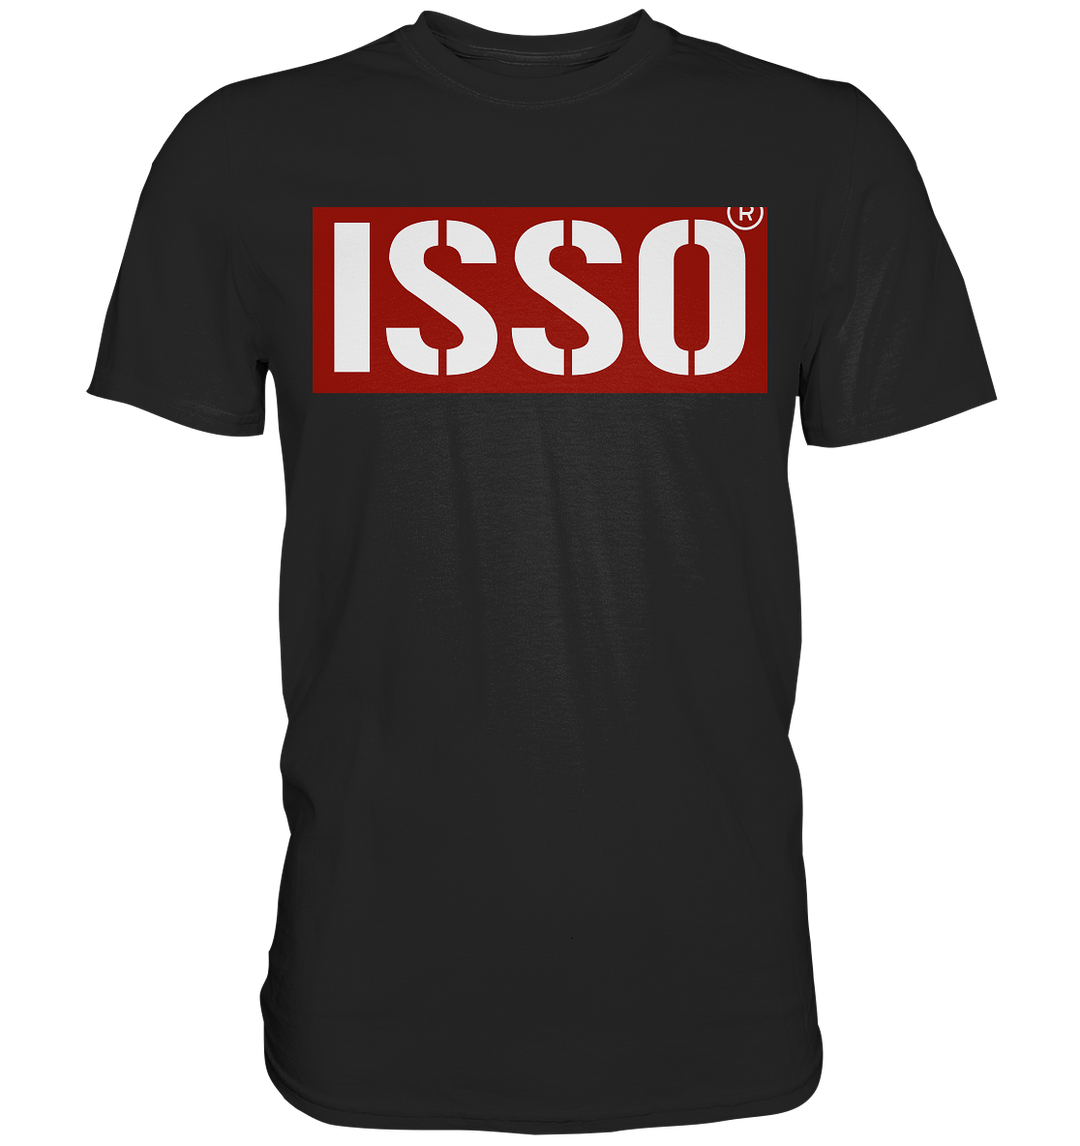 "ISSO" - Premium Shirt